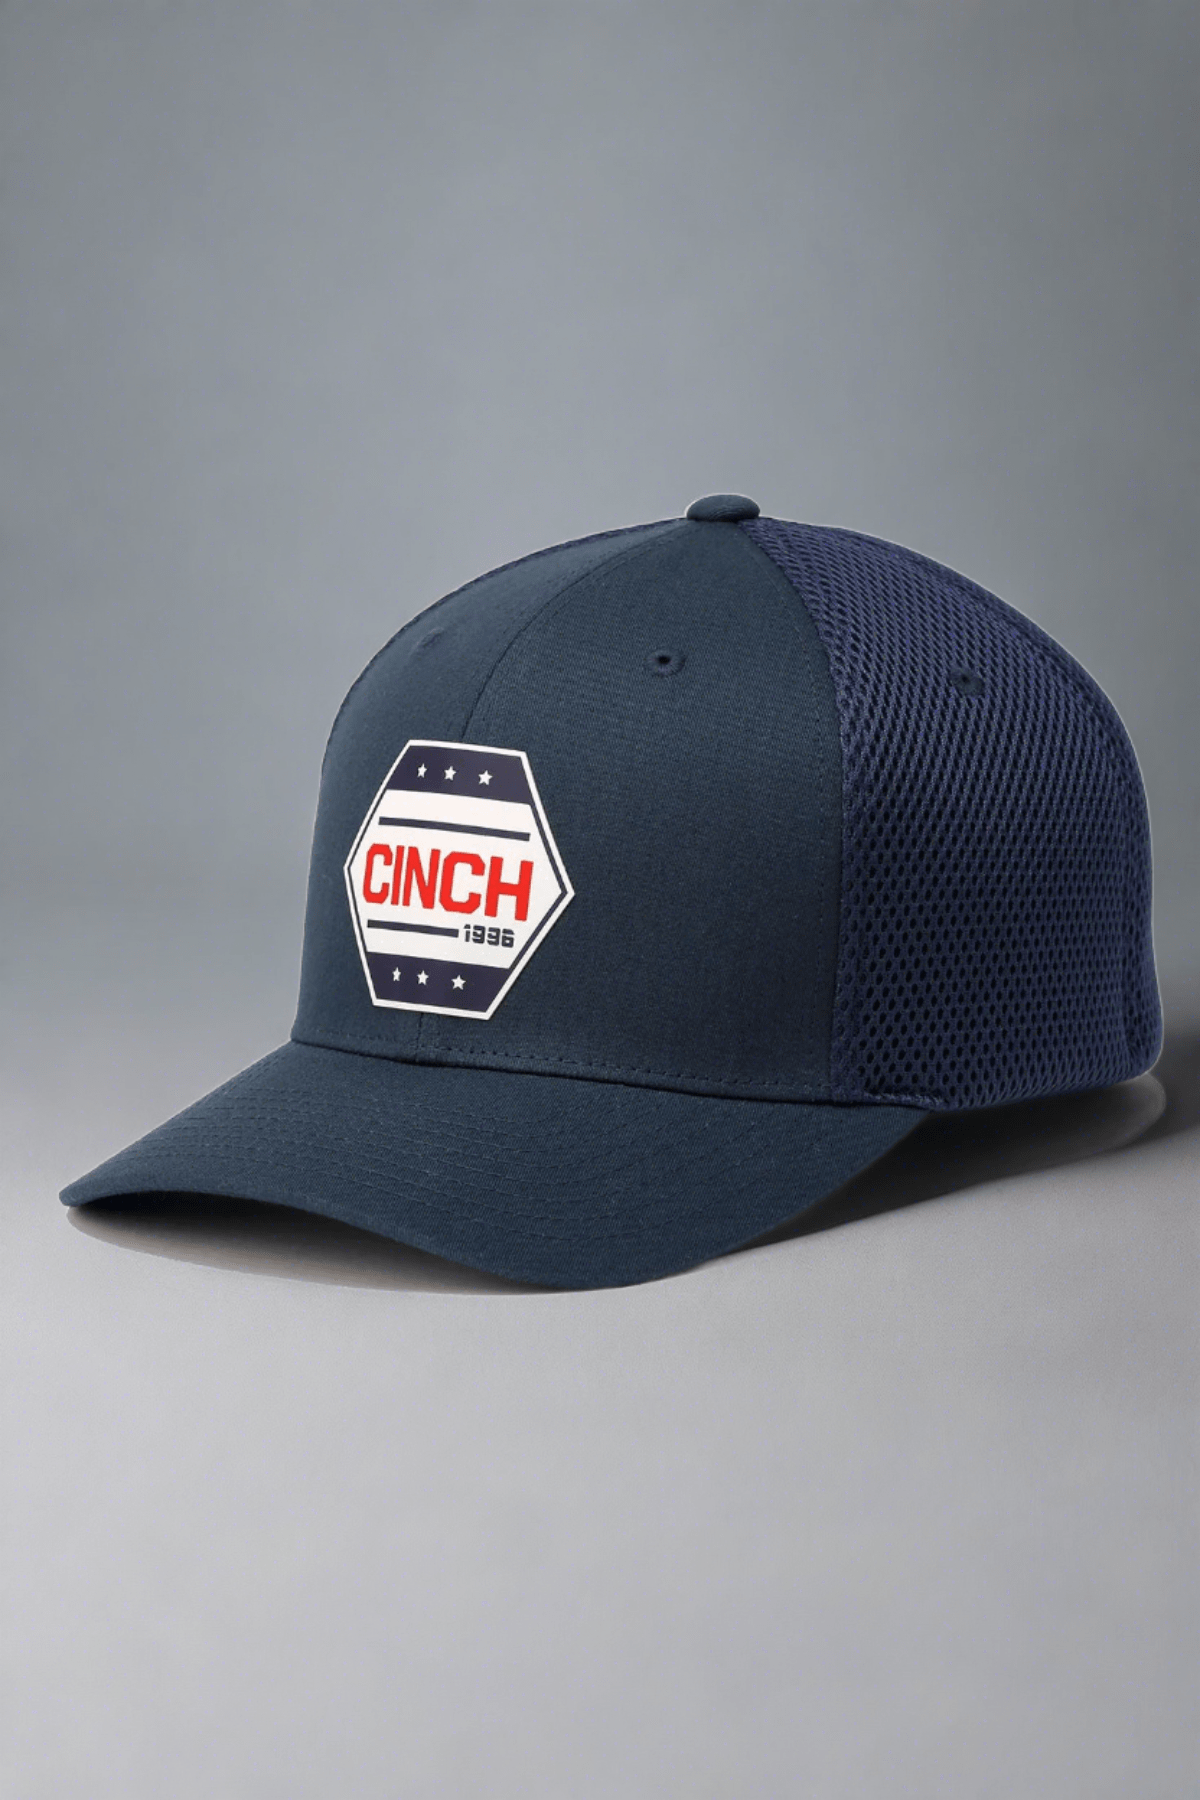 Cinch Men's Navy Flexfit Logo Hat S/M